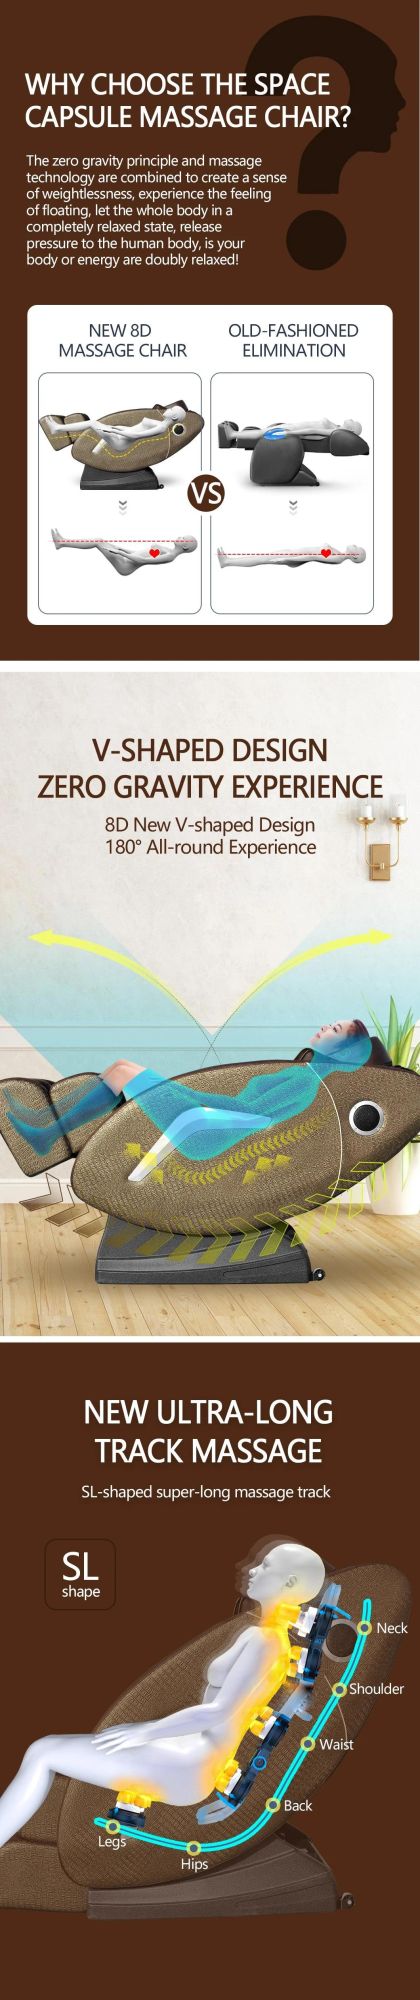 China E-Commerce Best Selling Full Body Luxury Zero Gravity Massage Chair